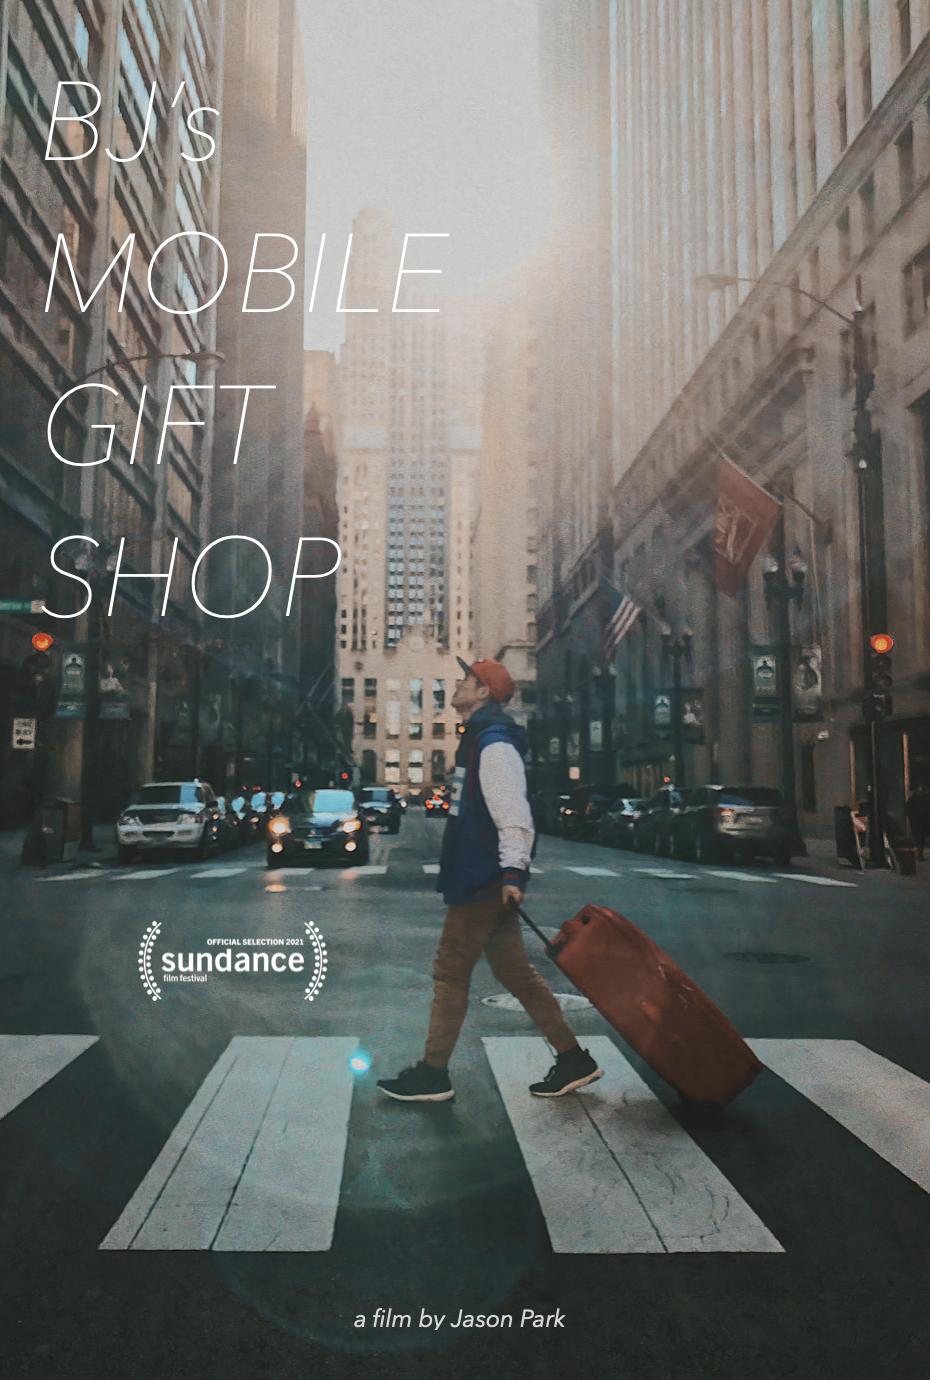 BJ's Mobile Gift Shop (2021)